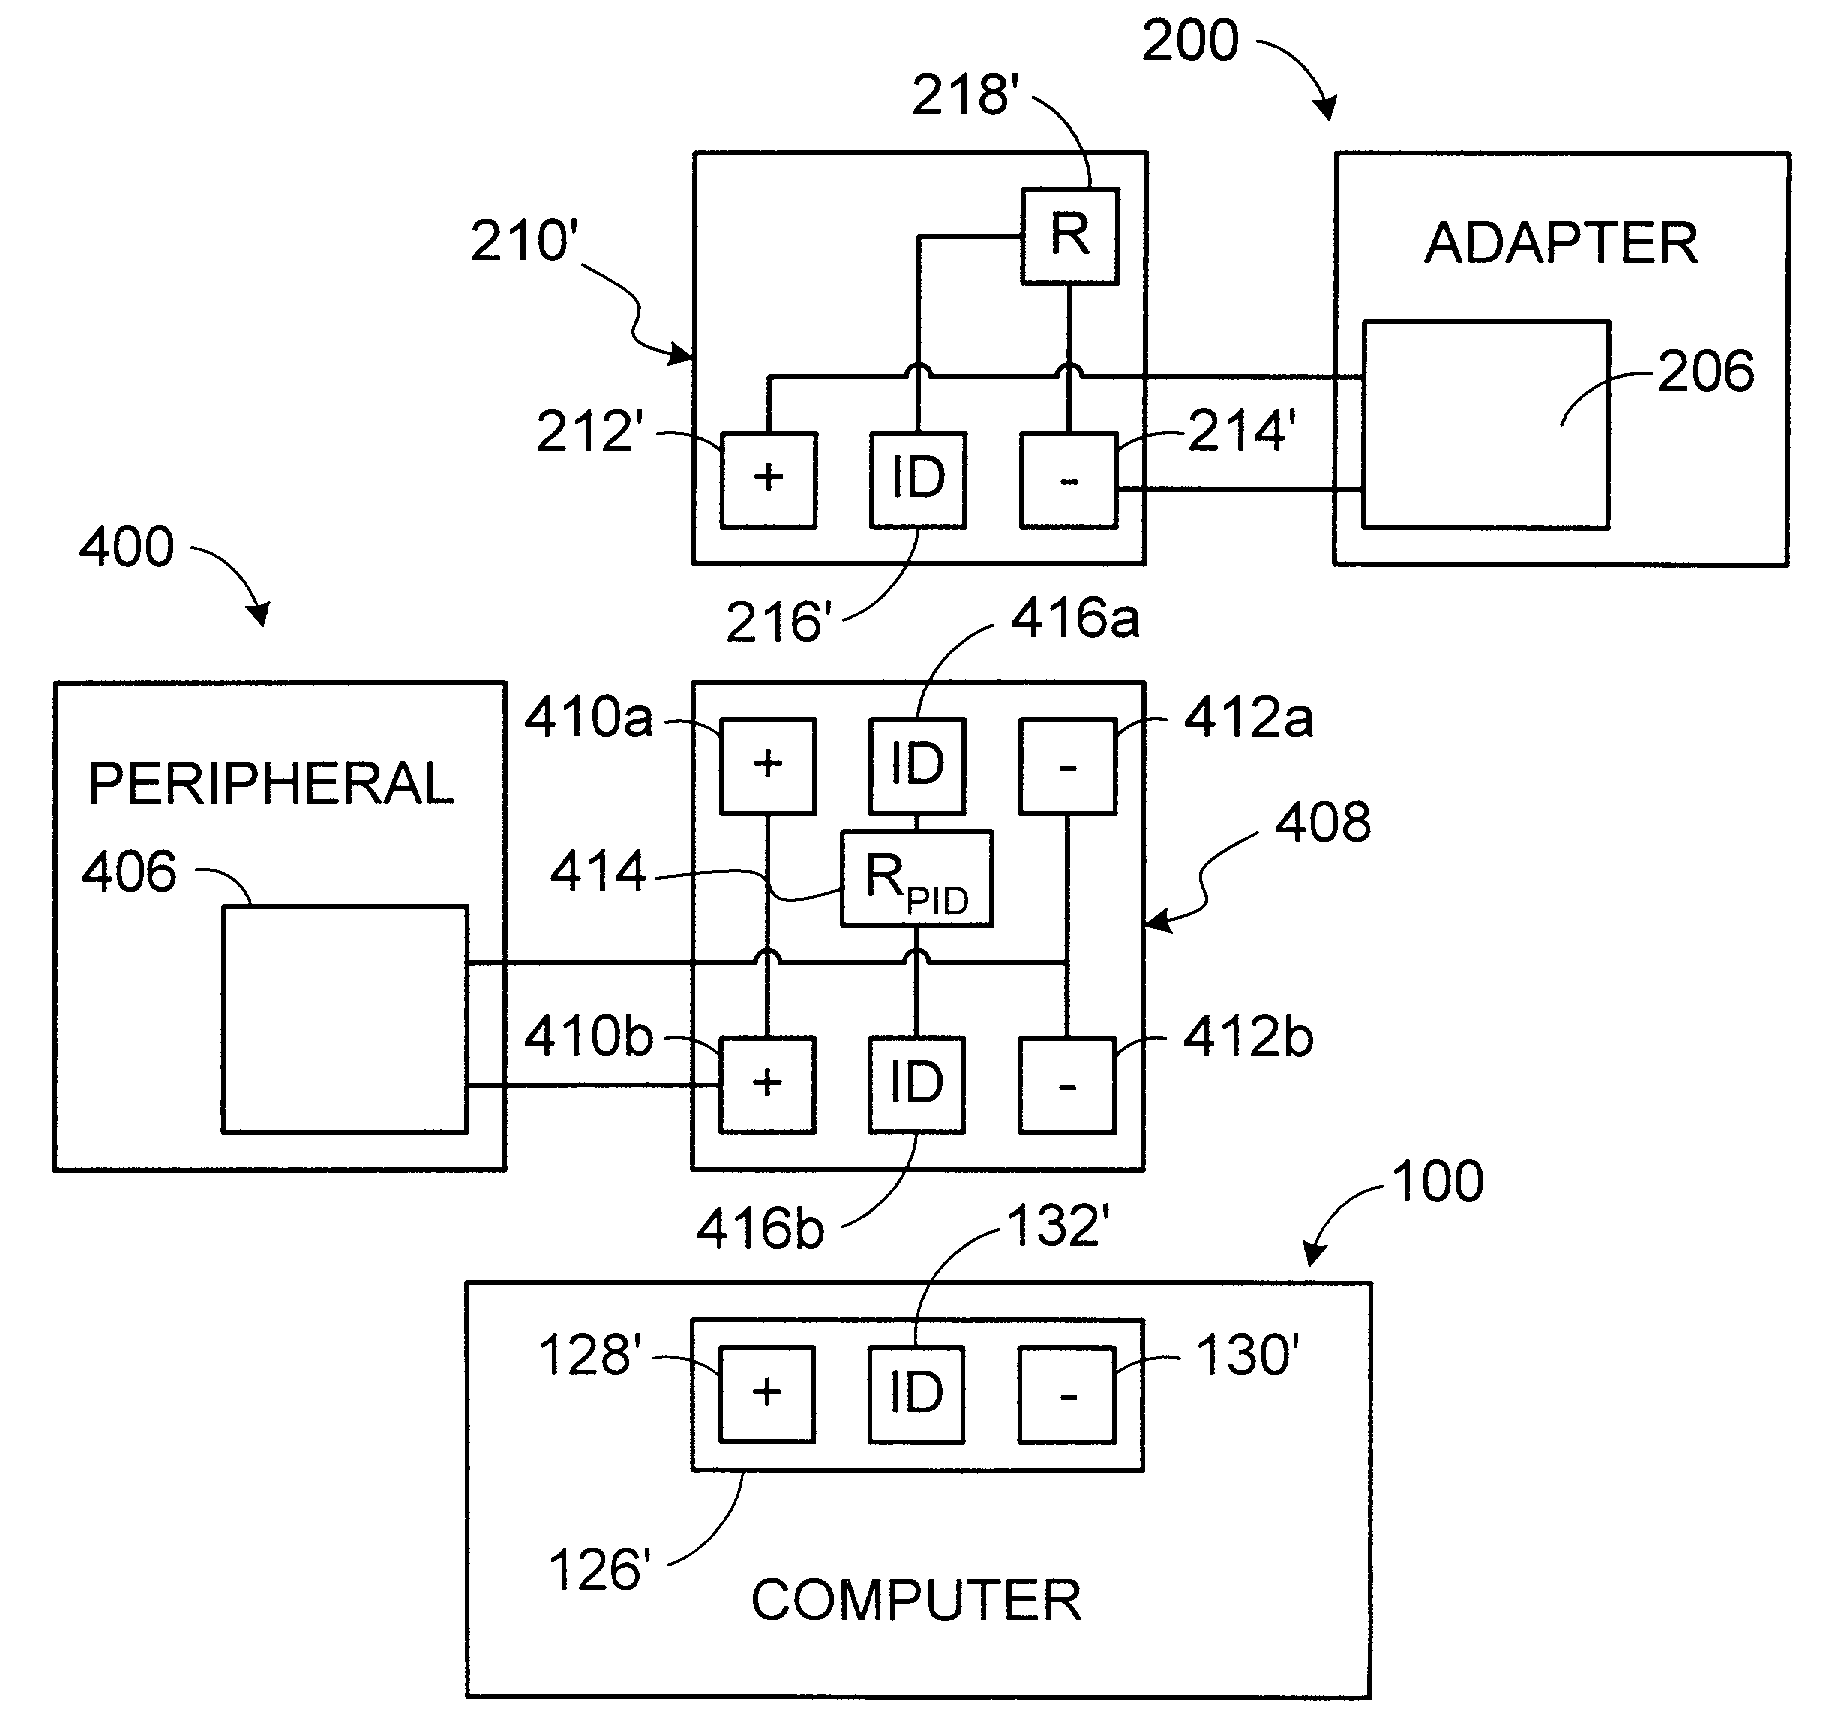 Power adapter identification